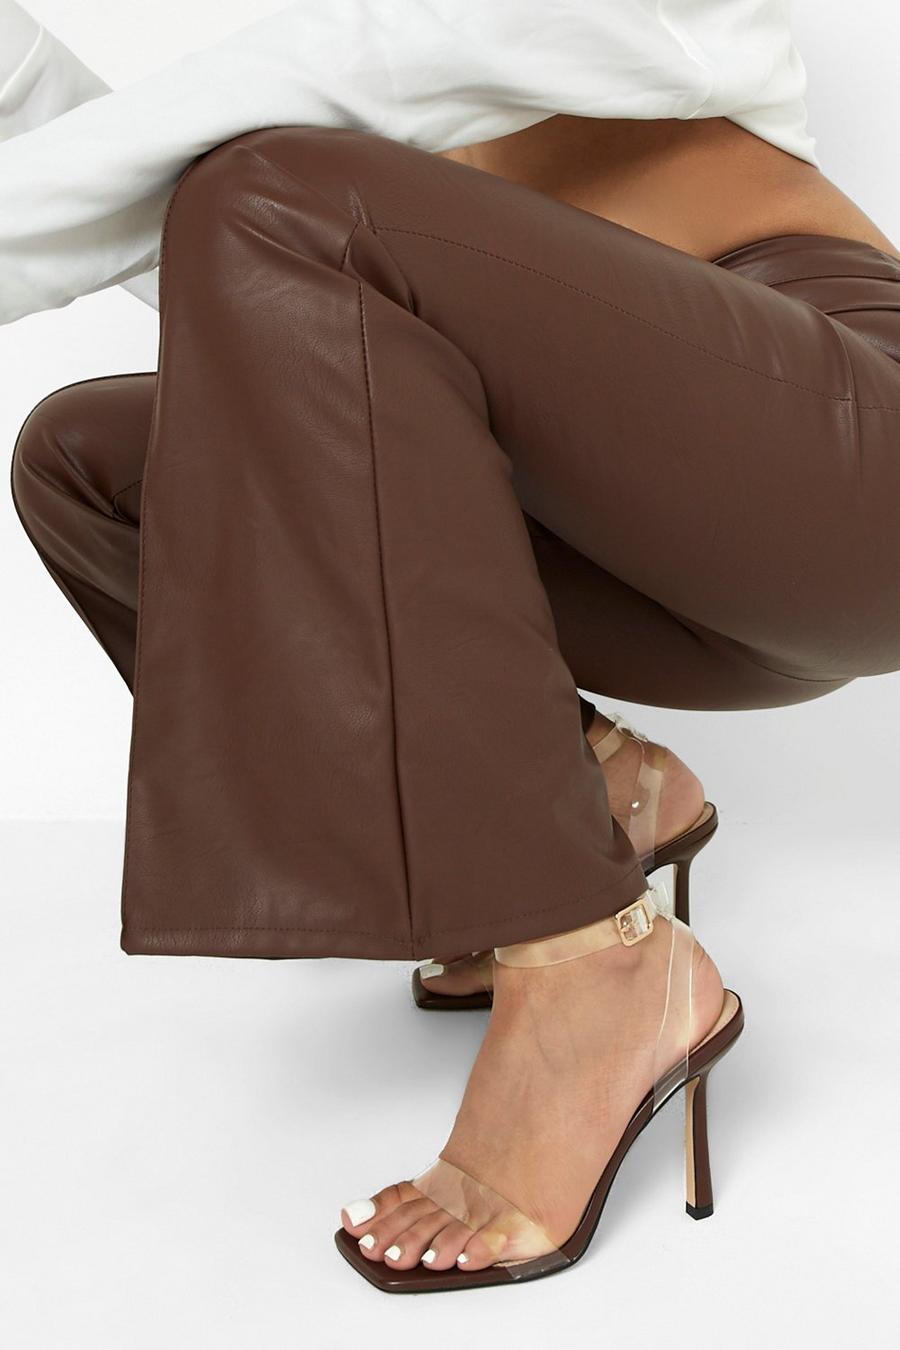 Heels, Chocolate marron